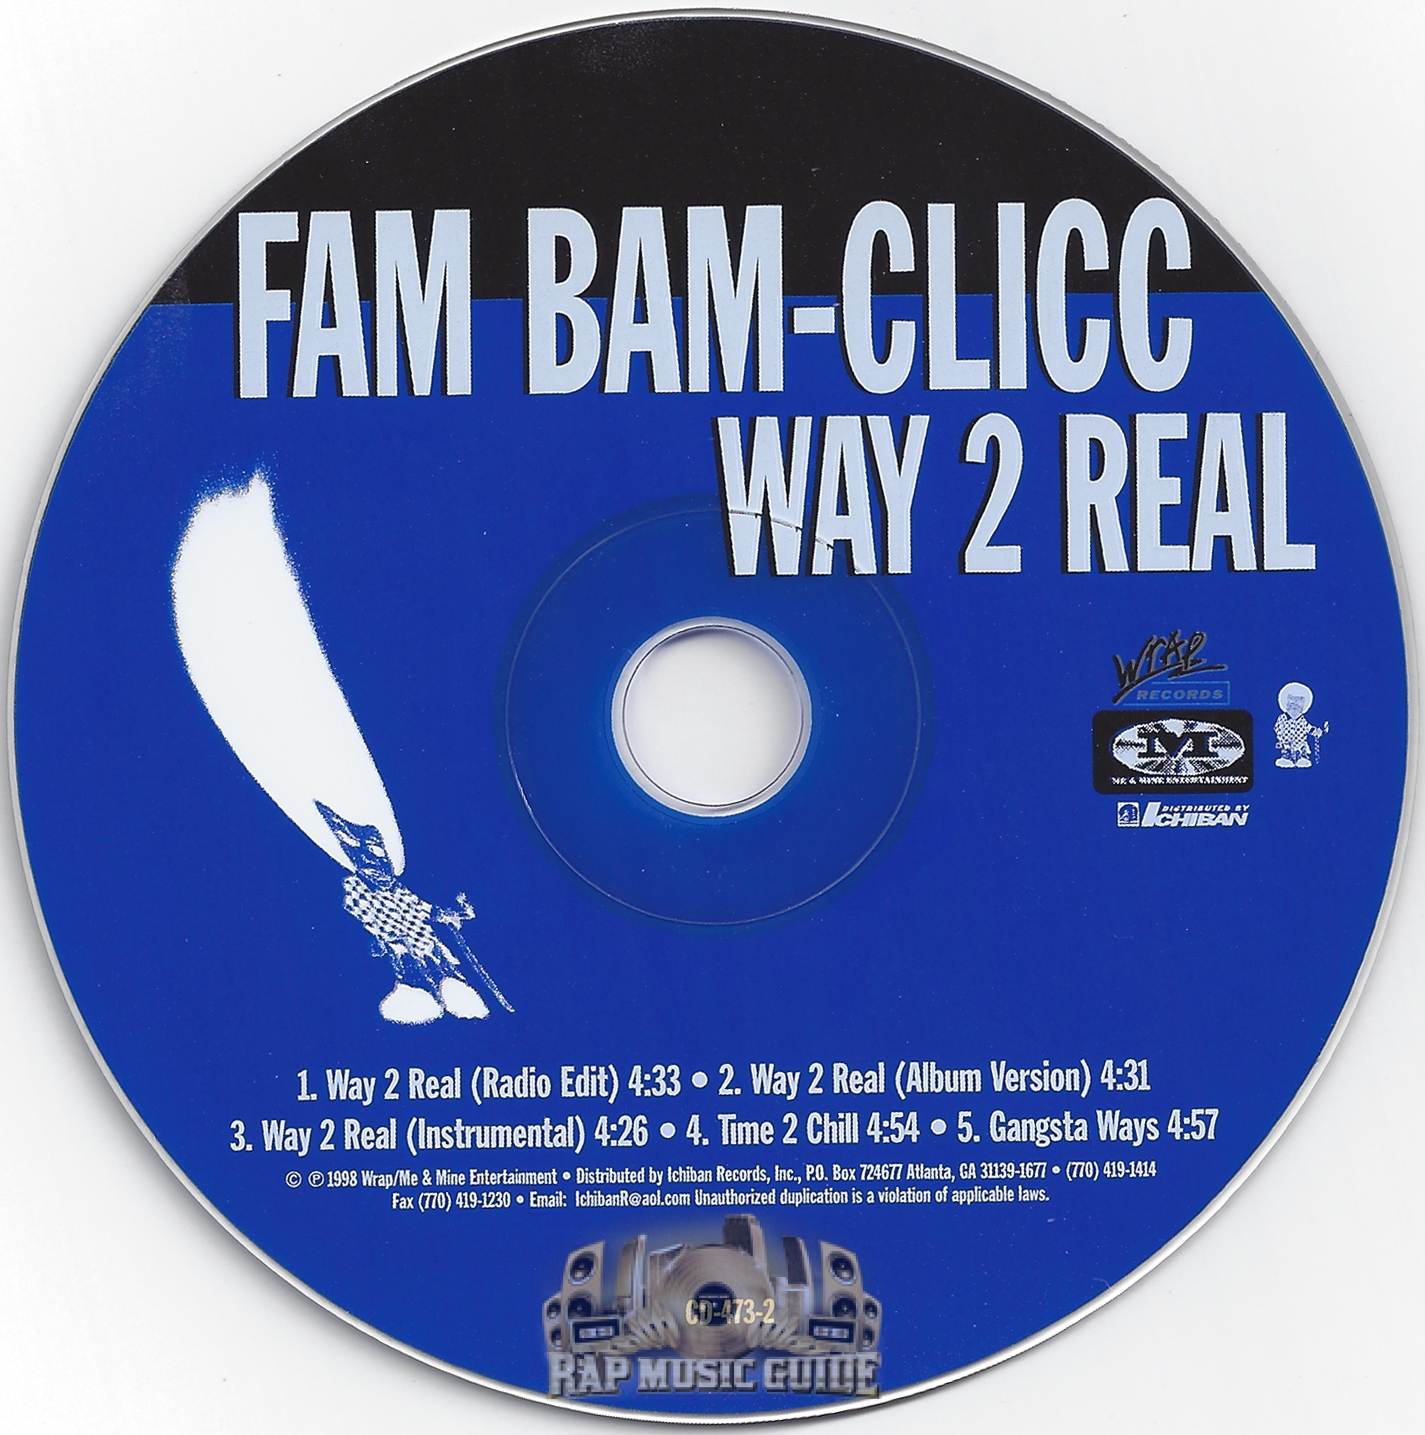 Fam Bam Clicc - Way 2 Real: CD | Rap Music Guide